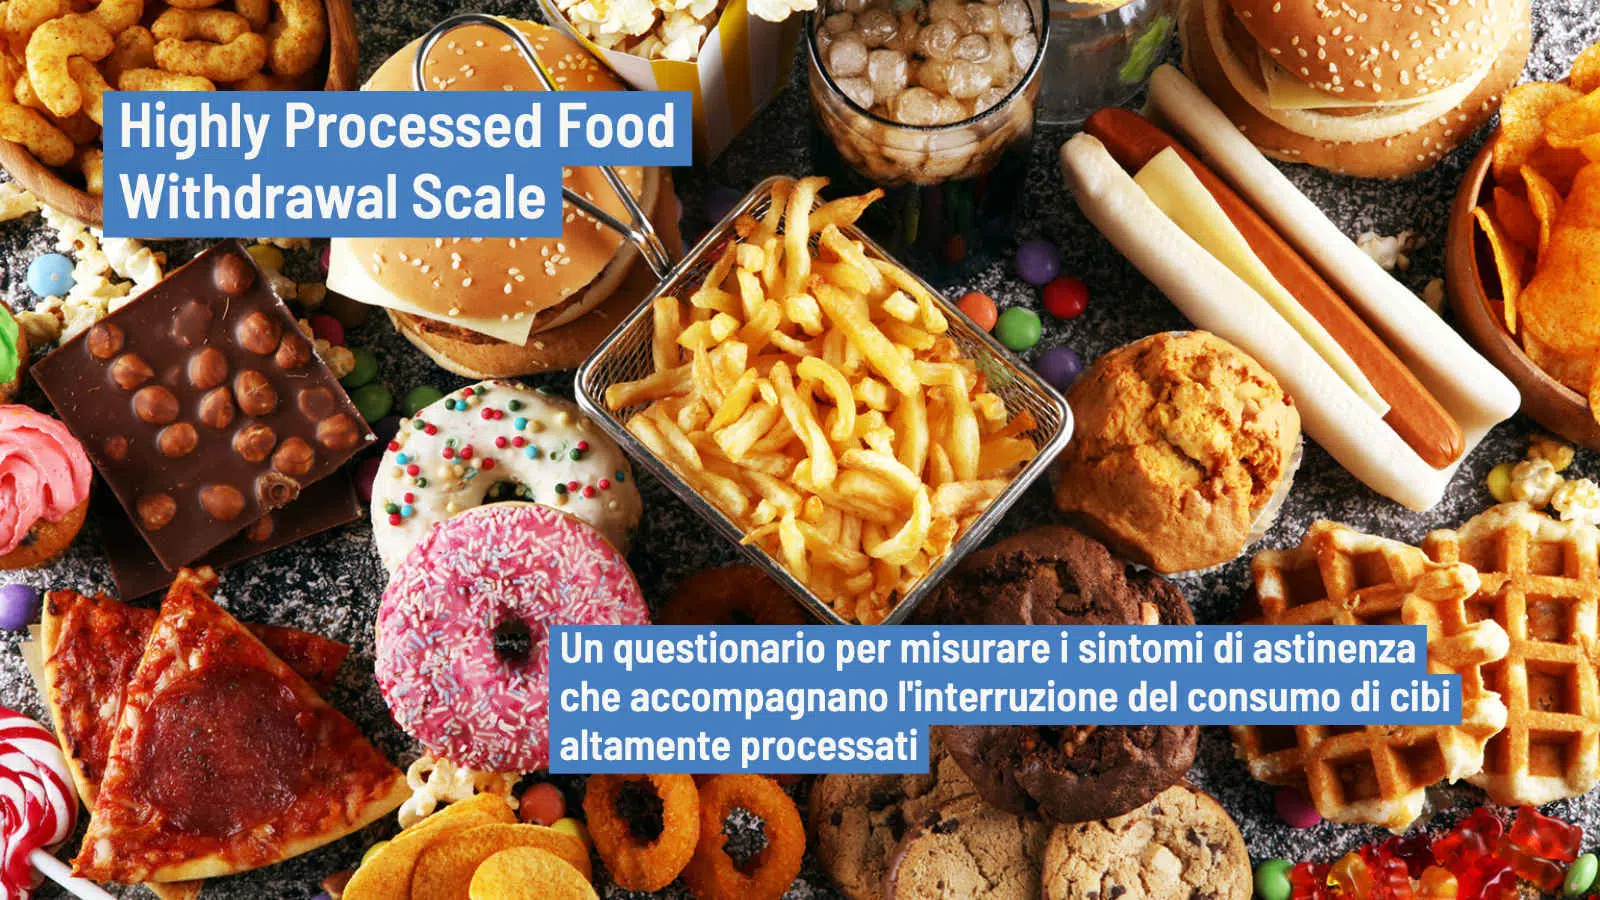 Cibi altamente processati: la Highly Processed Food Withdrawal Scale